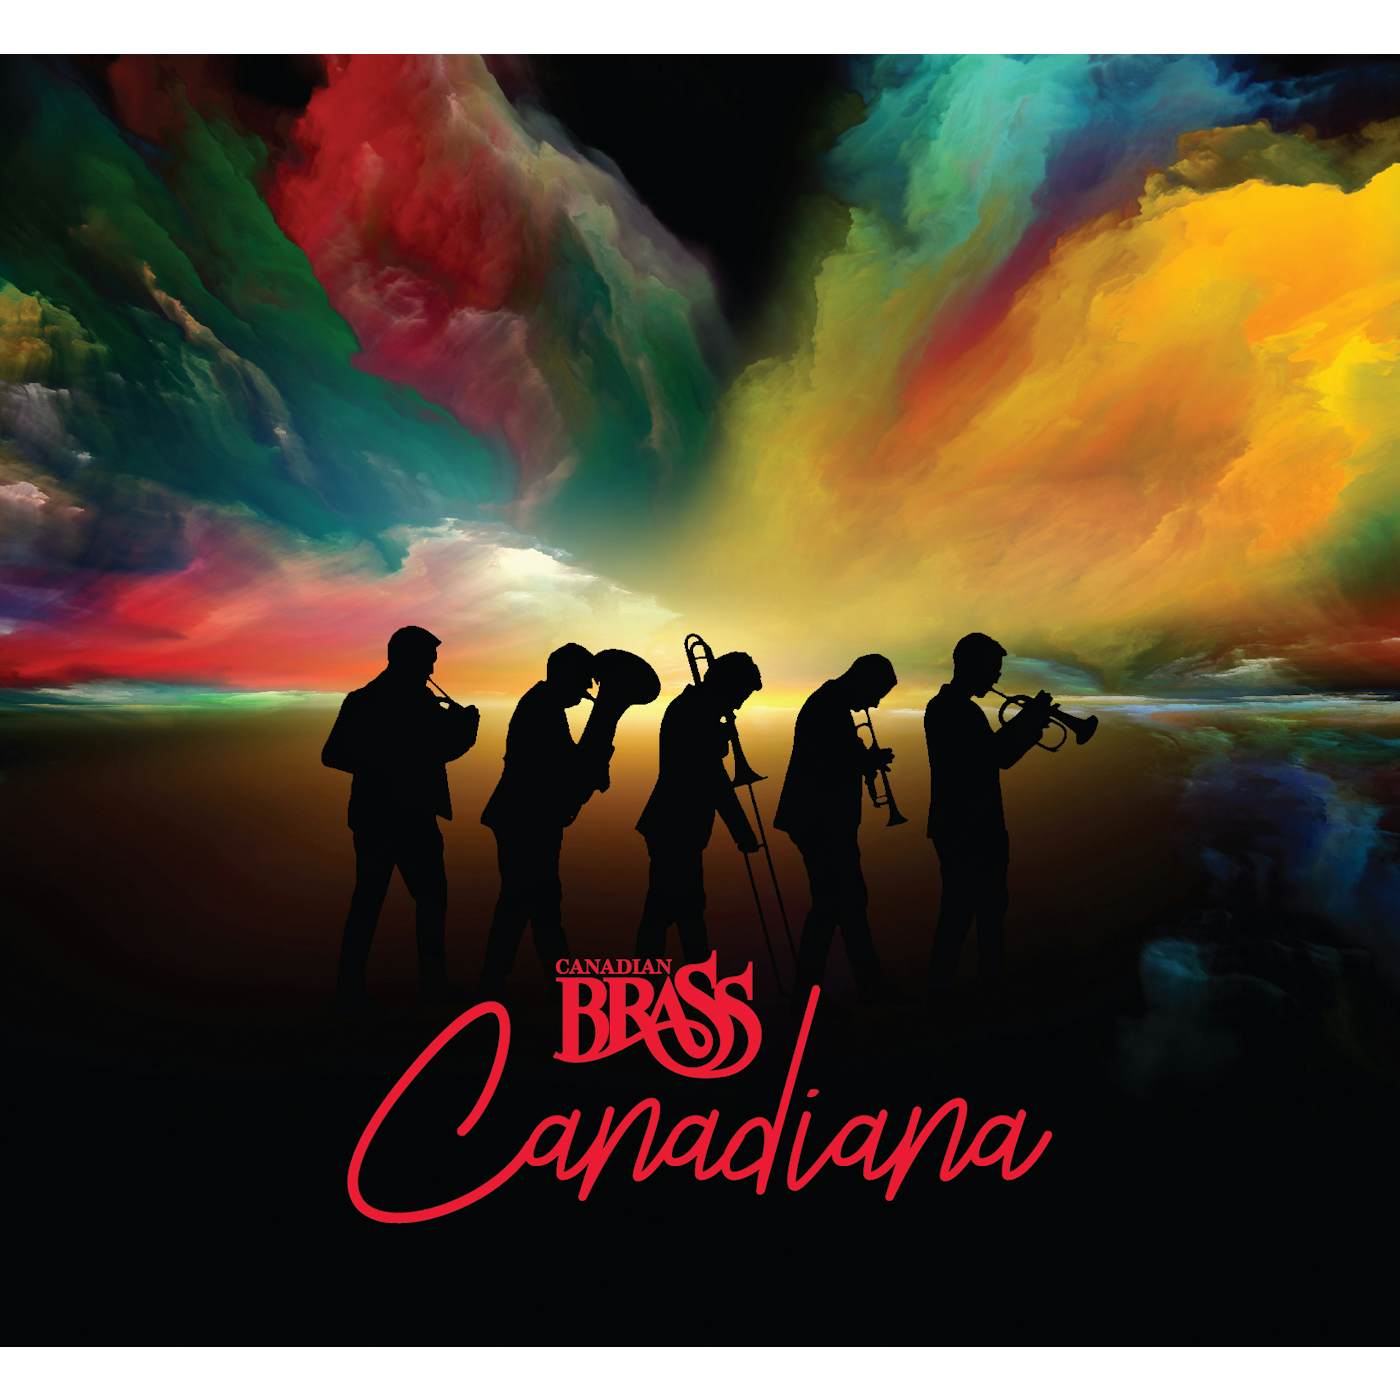 Canadian Brass CANADIANA CD